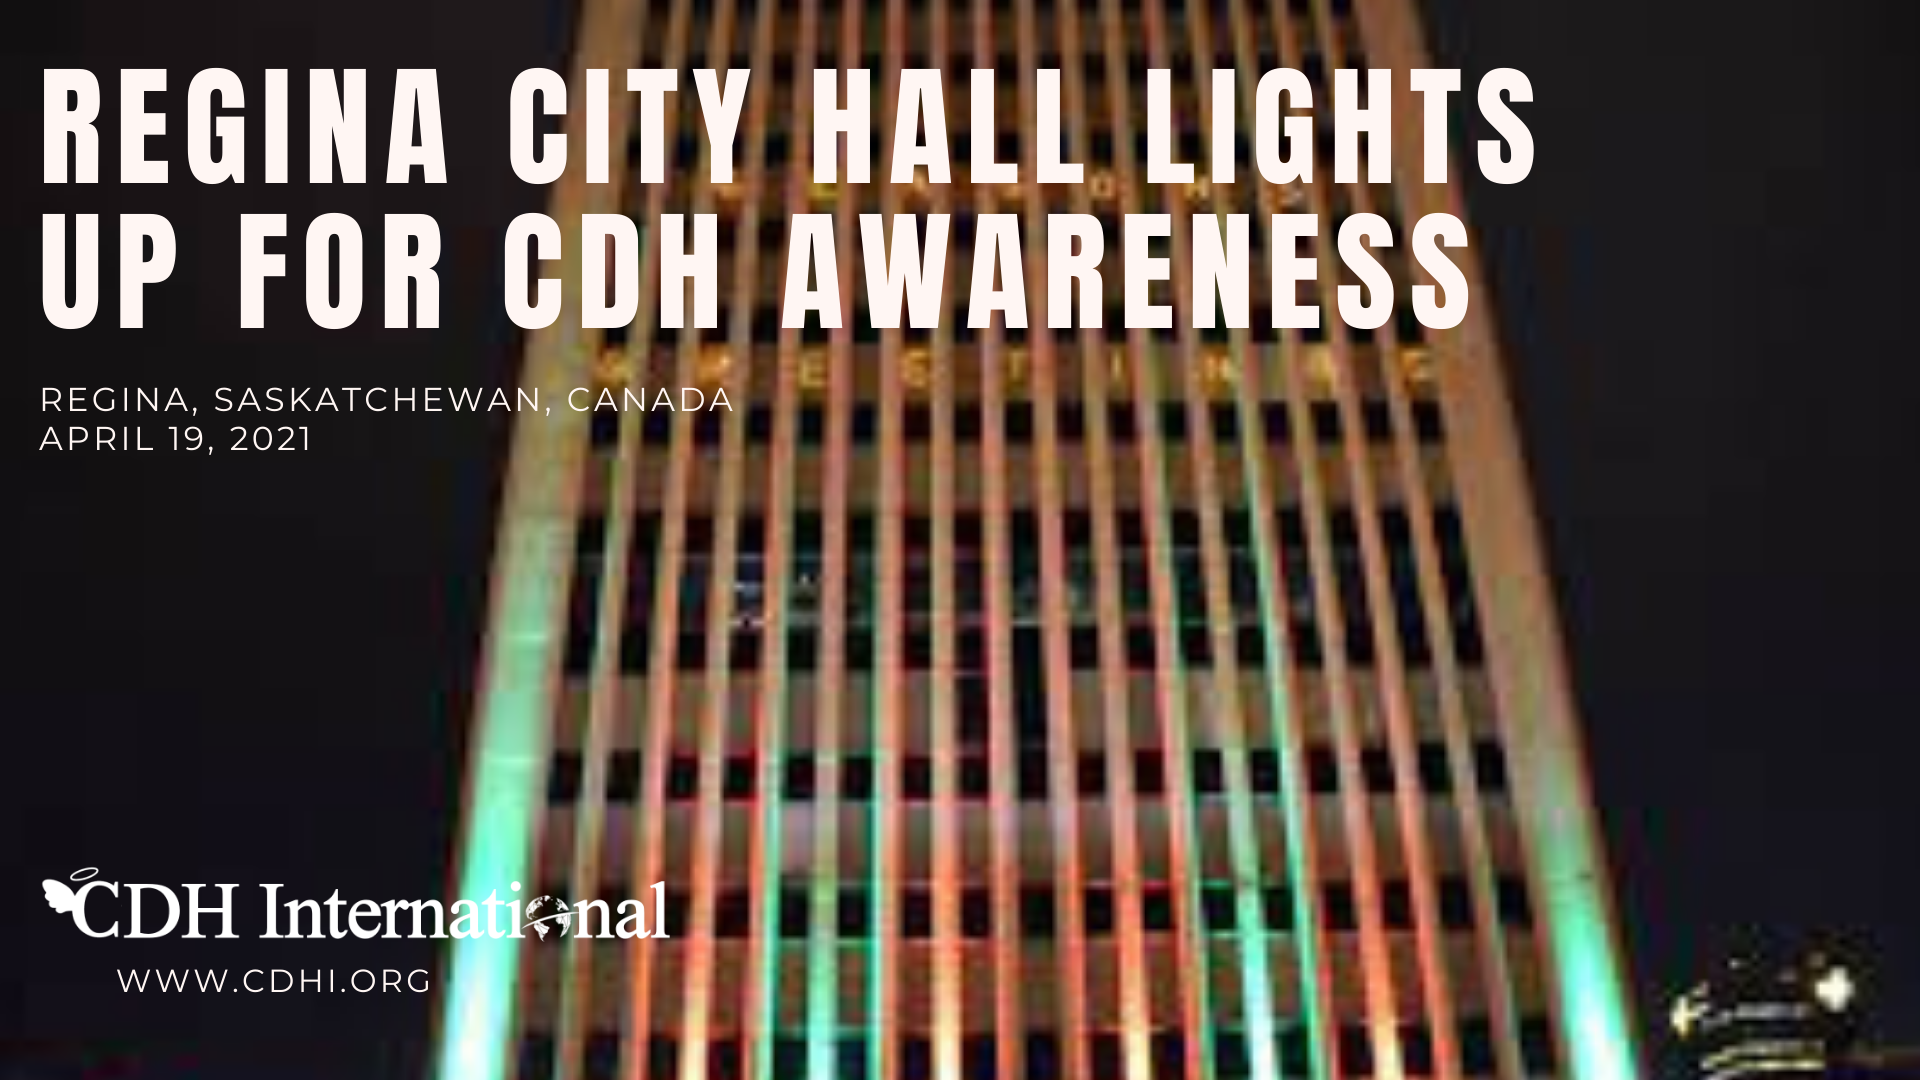 Halifax City Hall Lights Up For CDH Awareness